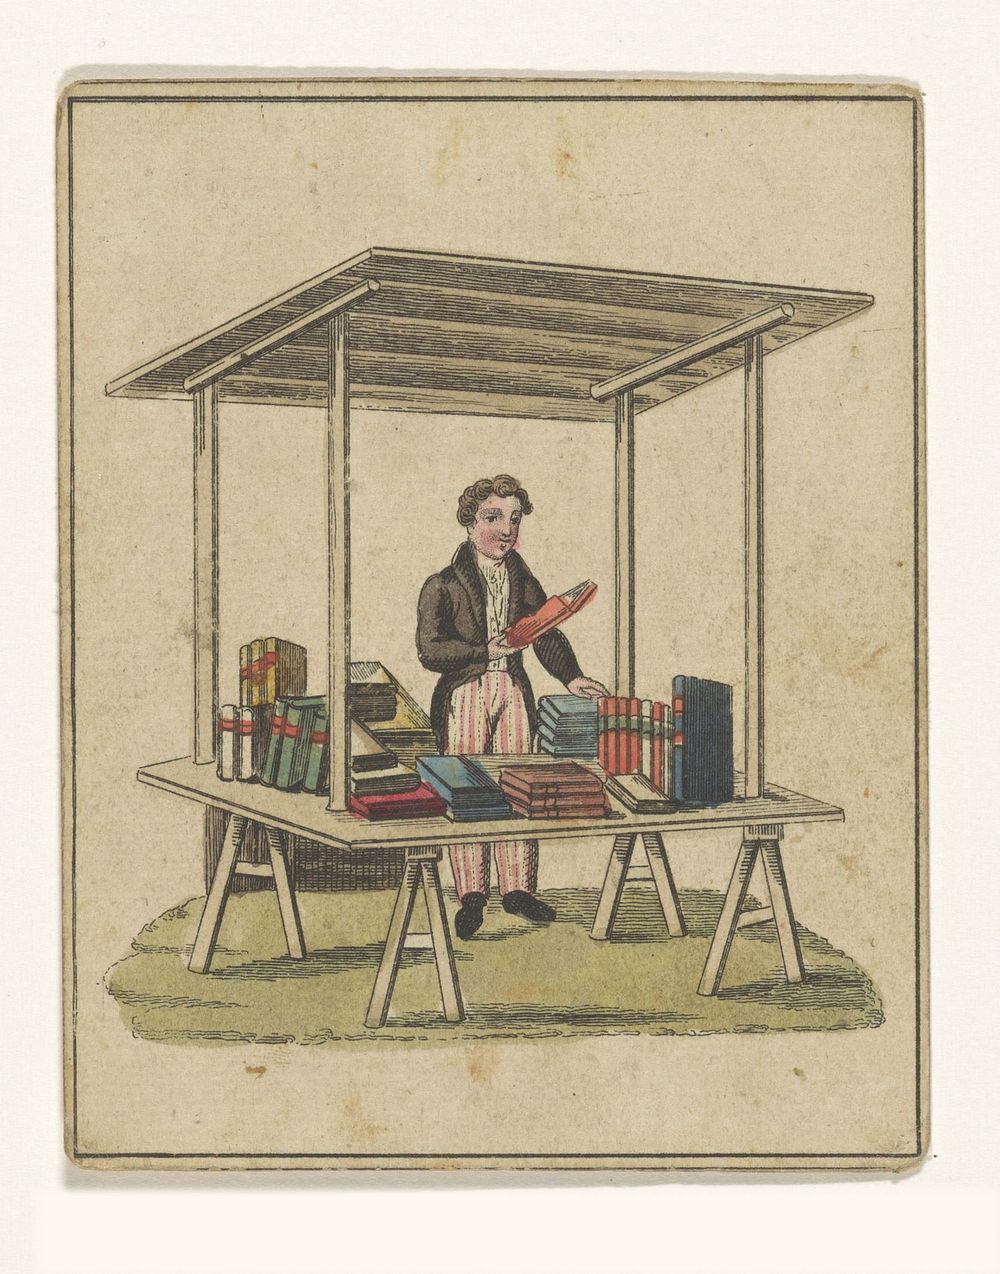 Boekhandelaar in zijn kraam (c. 1835) by anonymous and Joseph Bermann